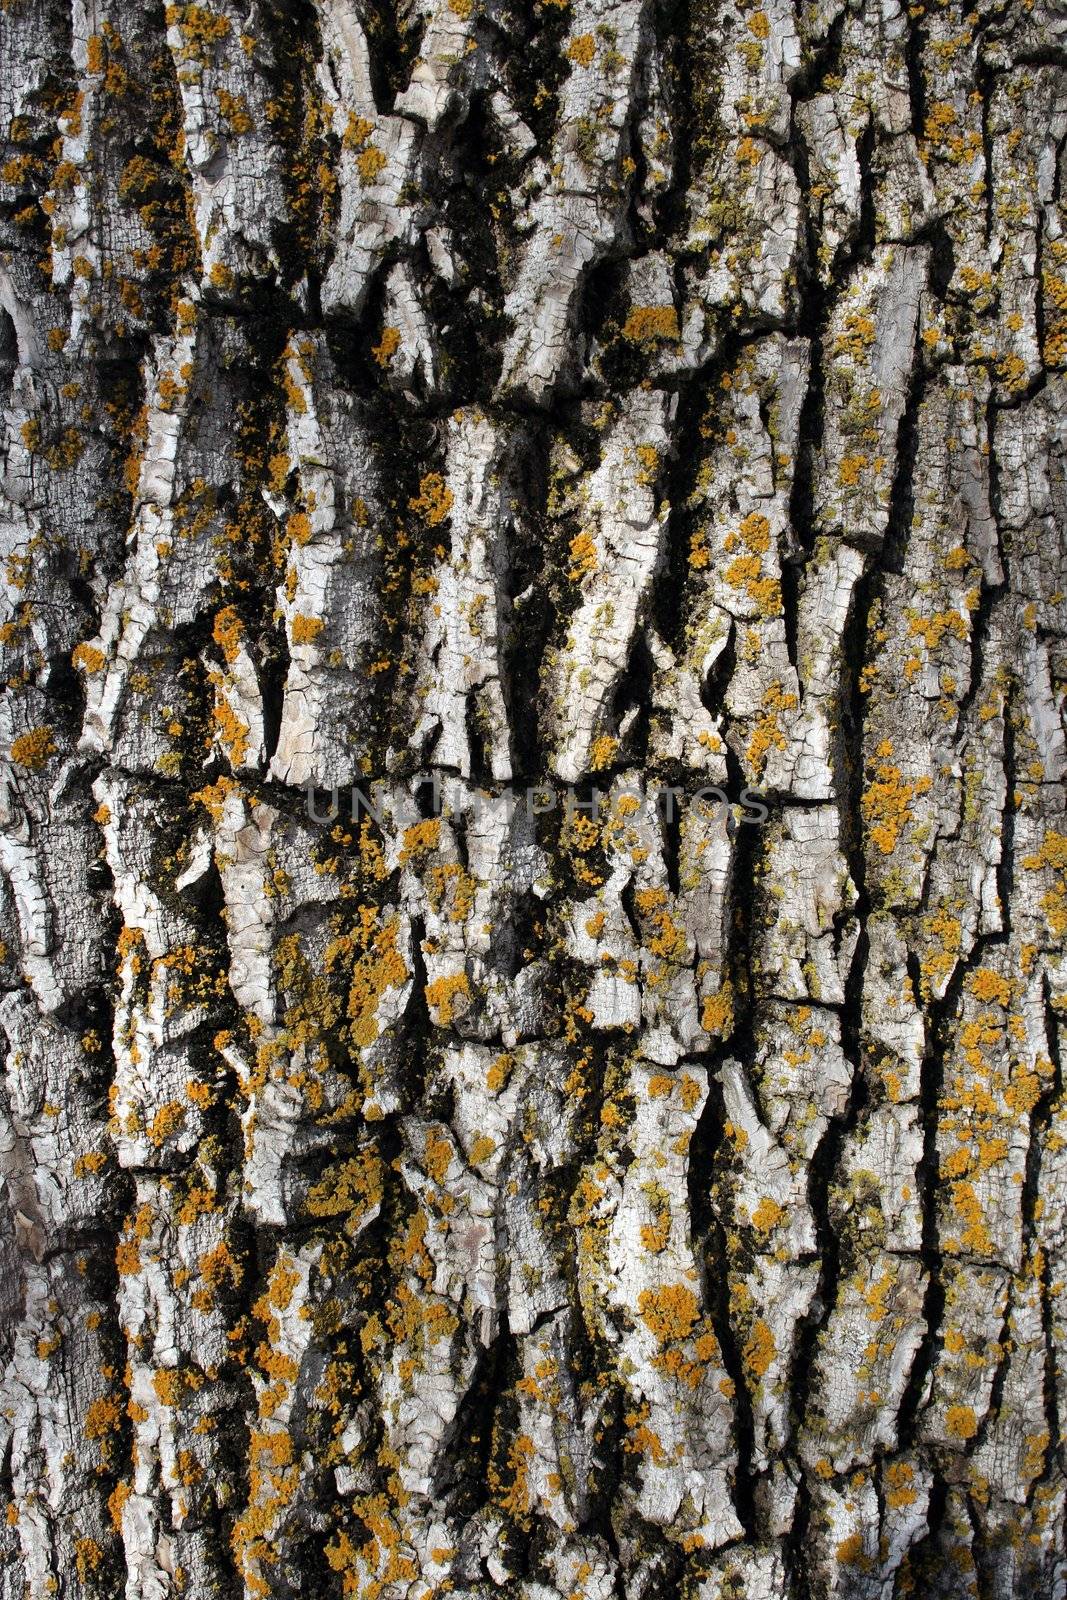 Mossy bark background by anikasalsera